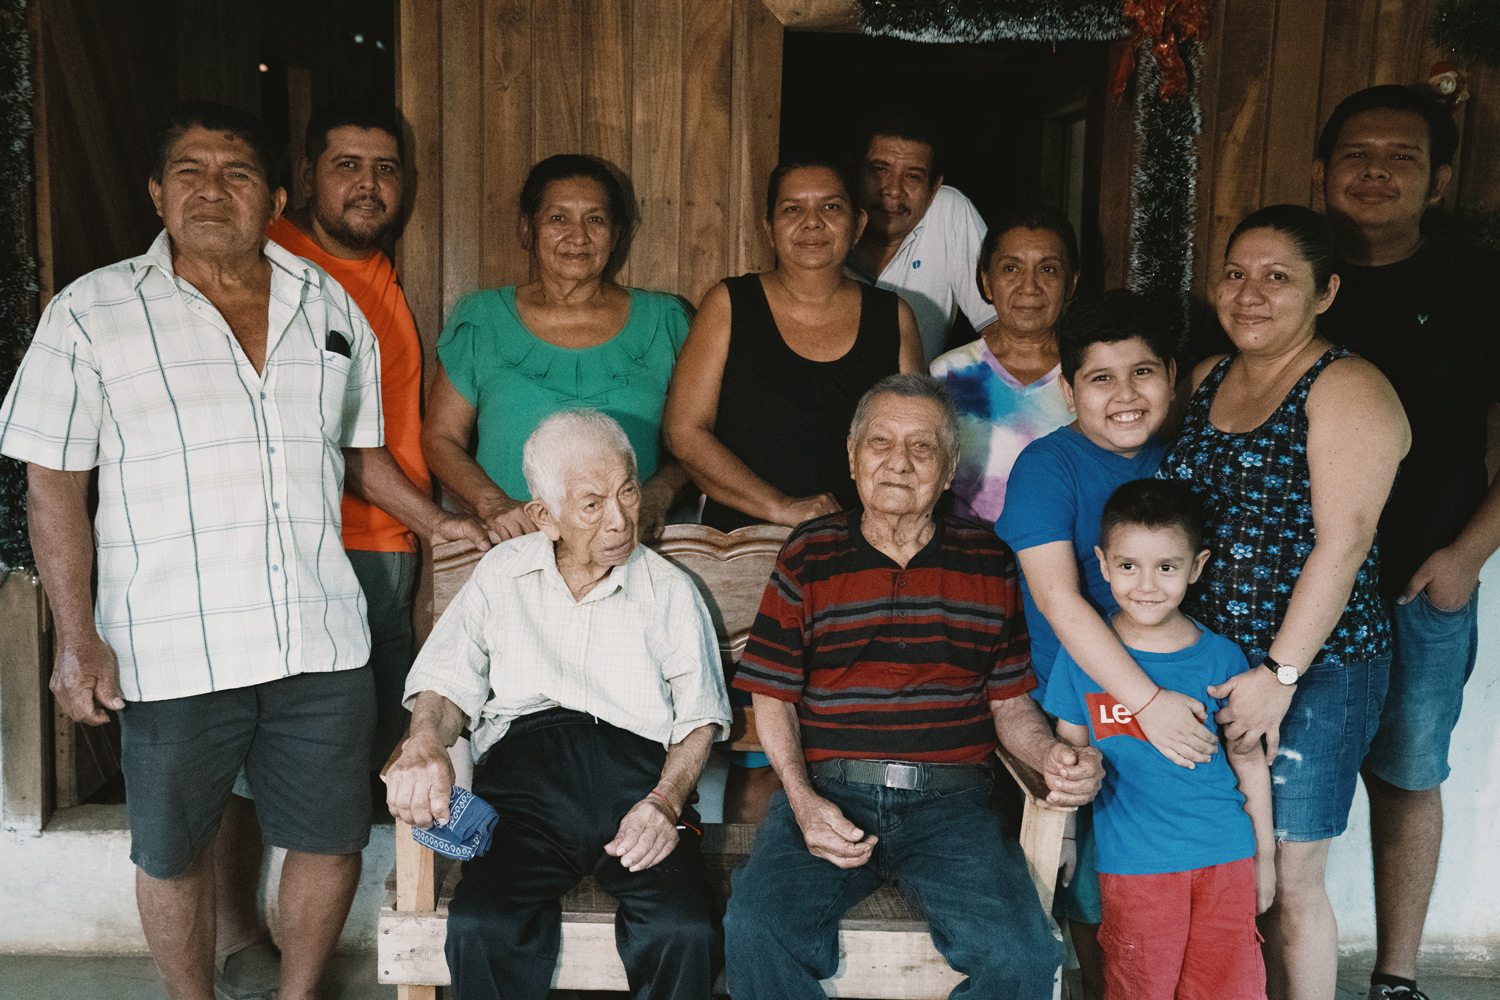 The Gómez family